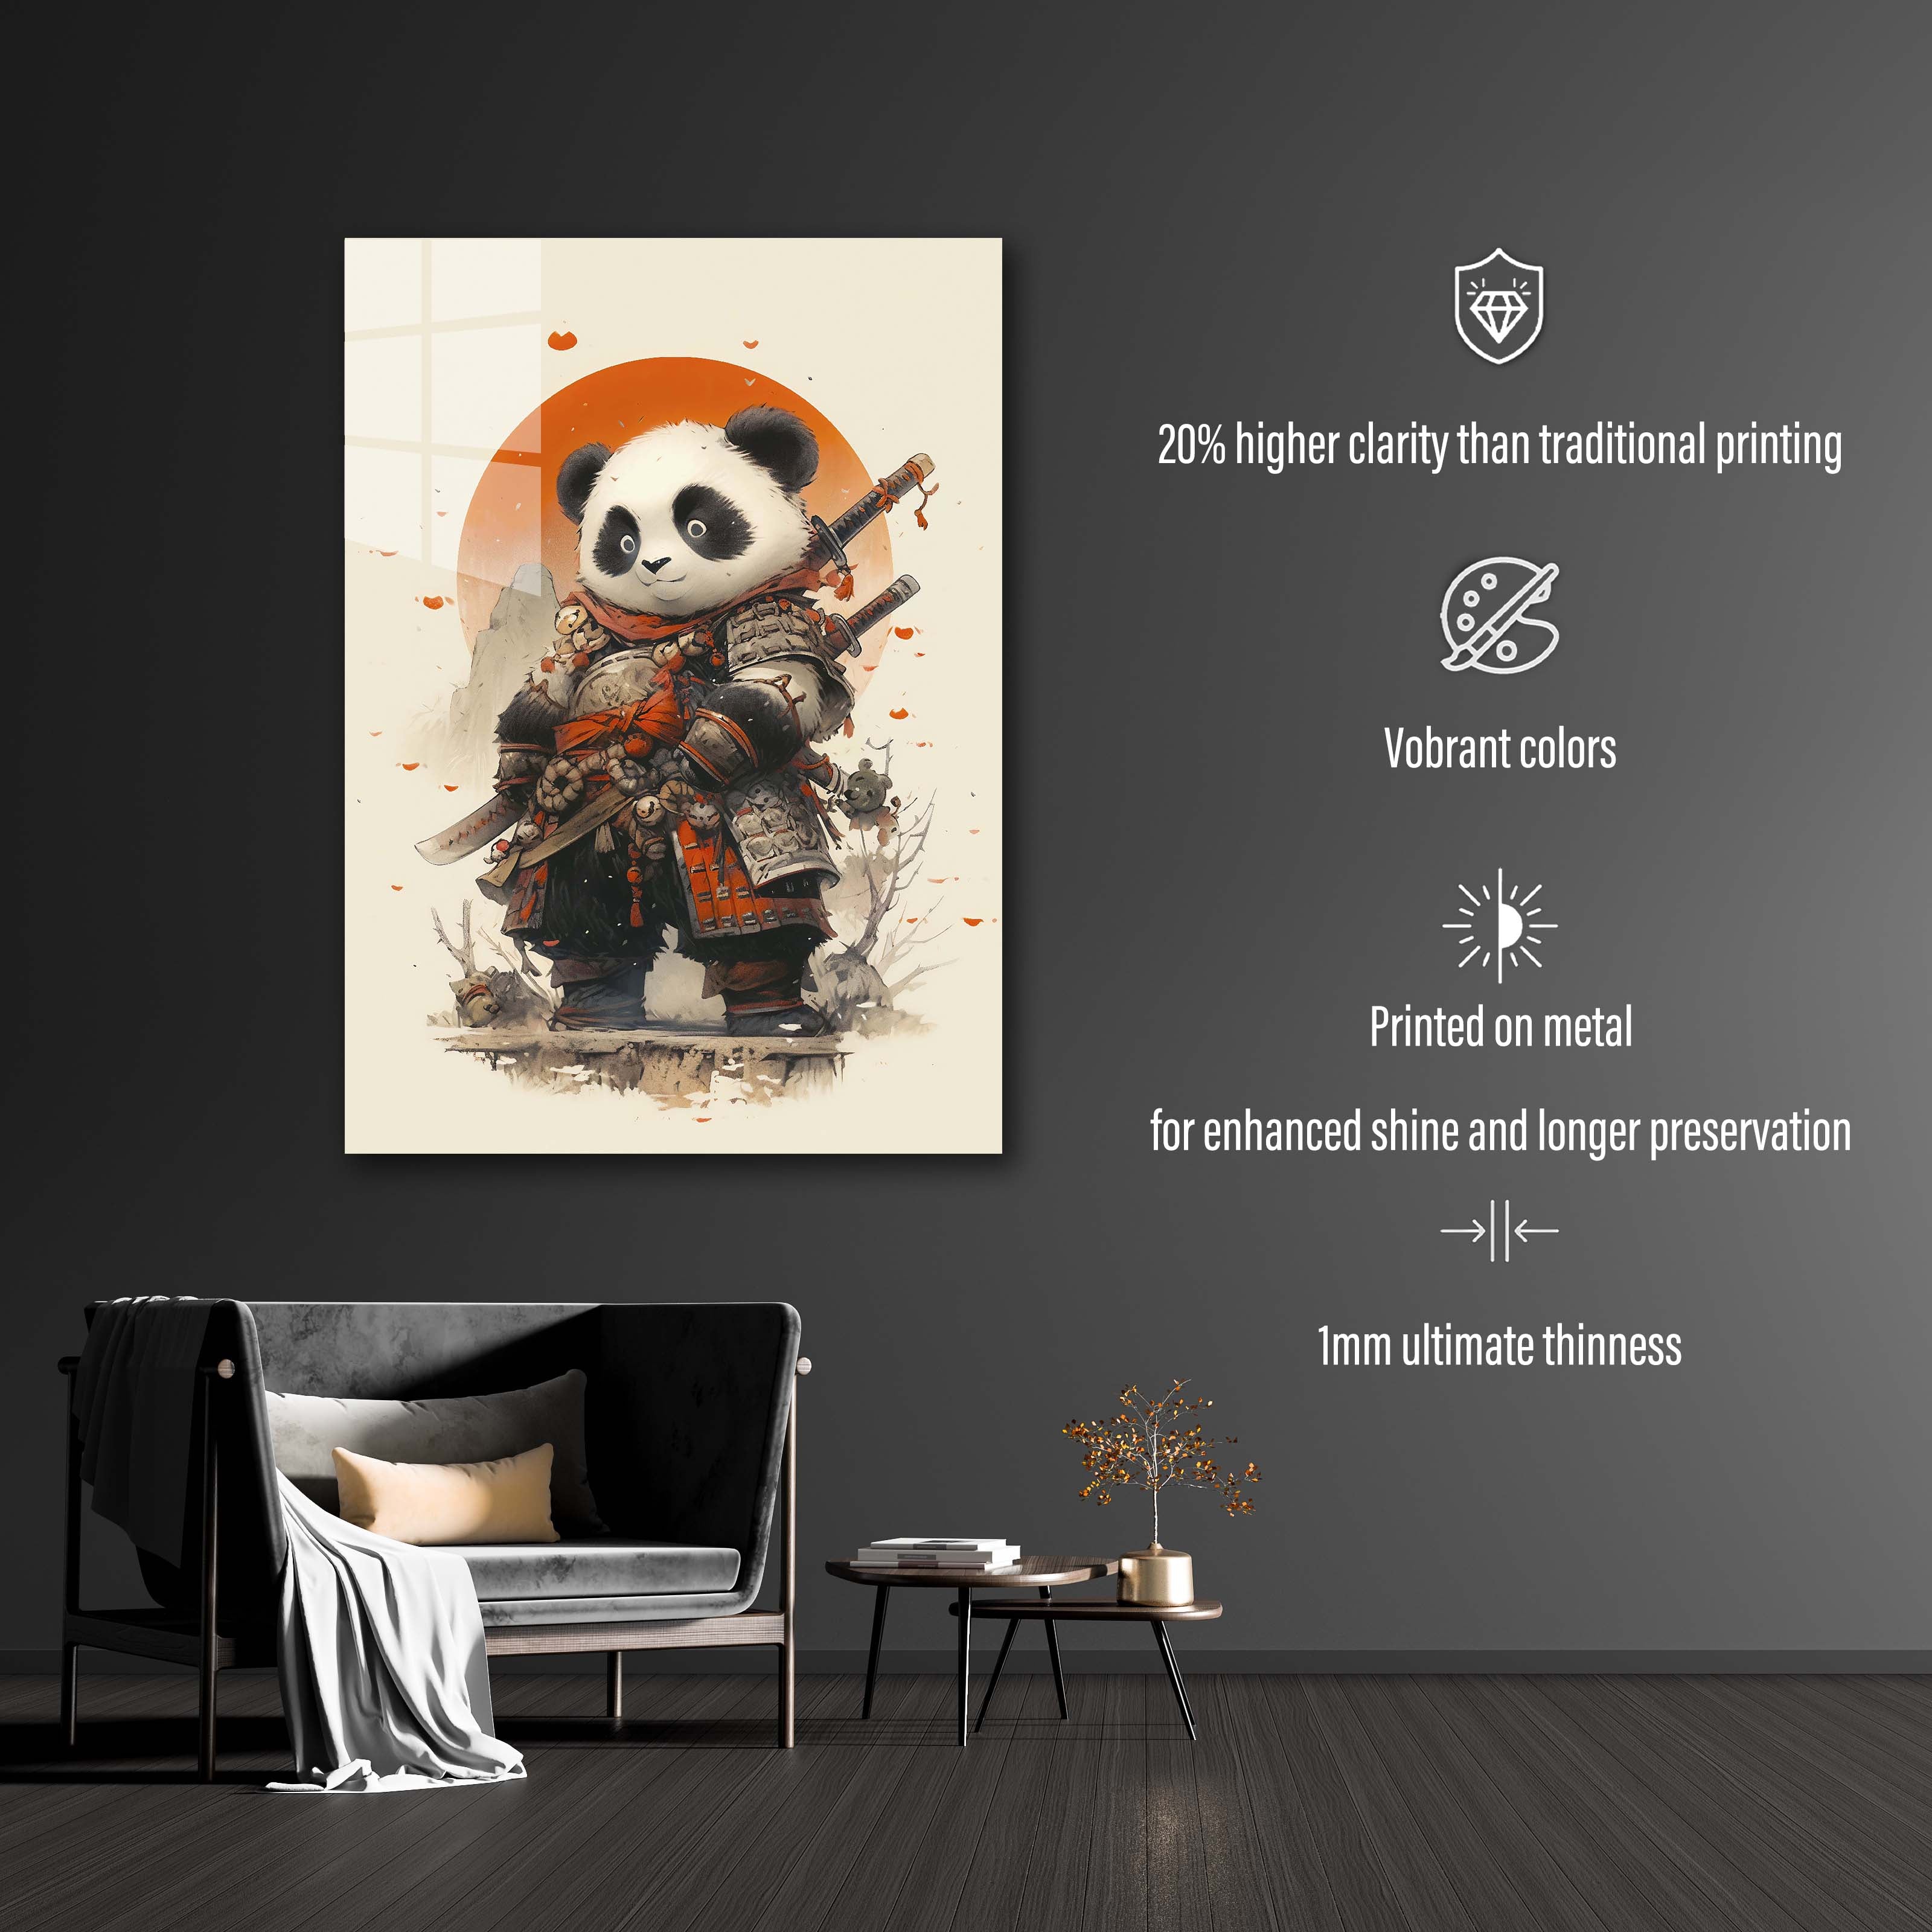 Panda Samurai-designed by @Diegosilva.arts